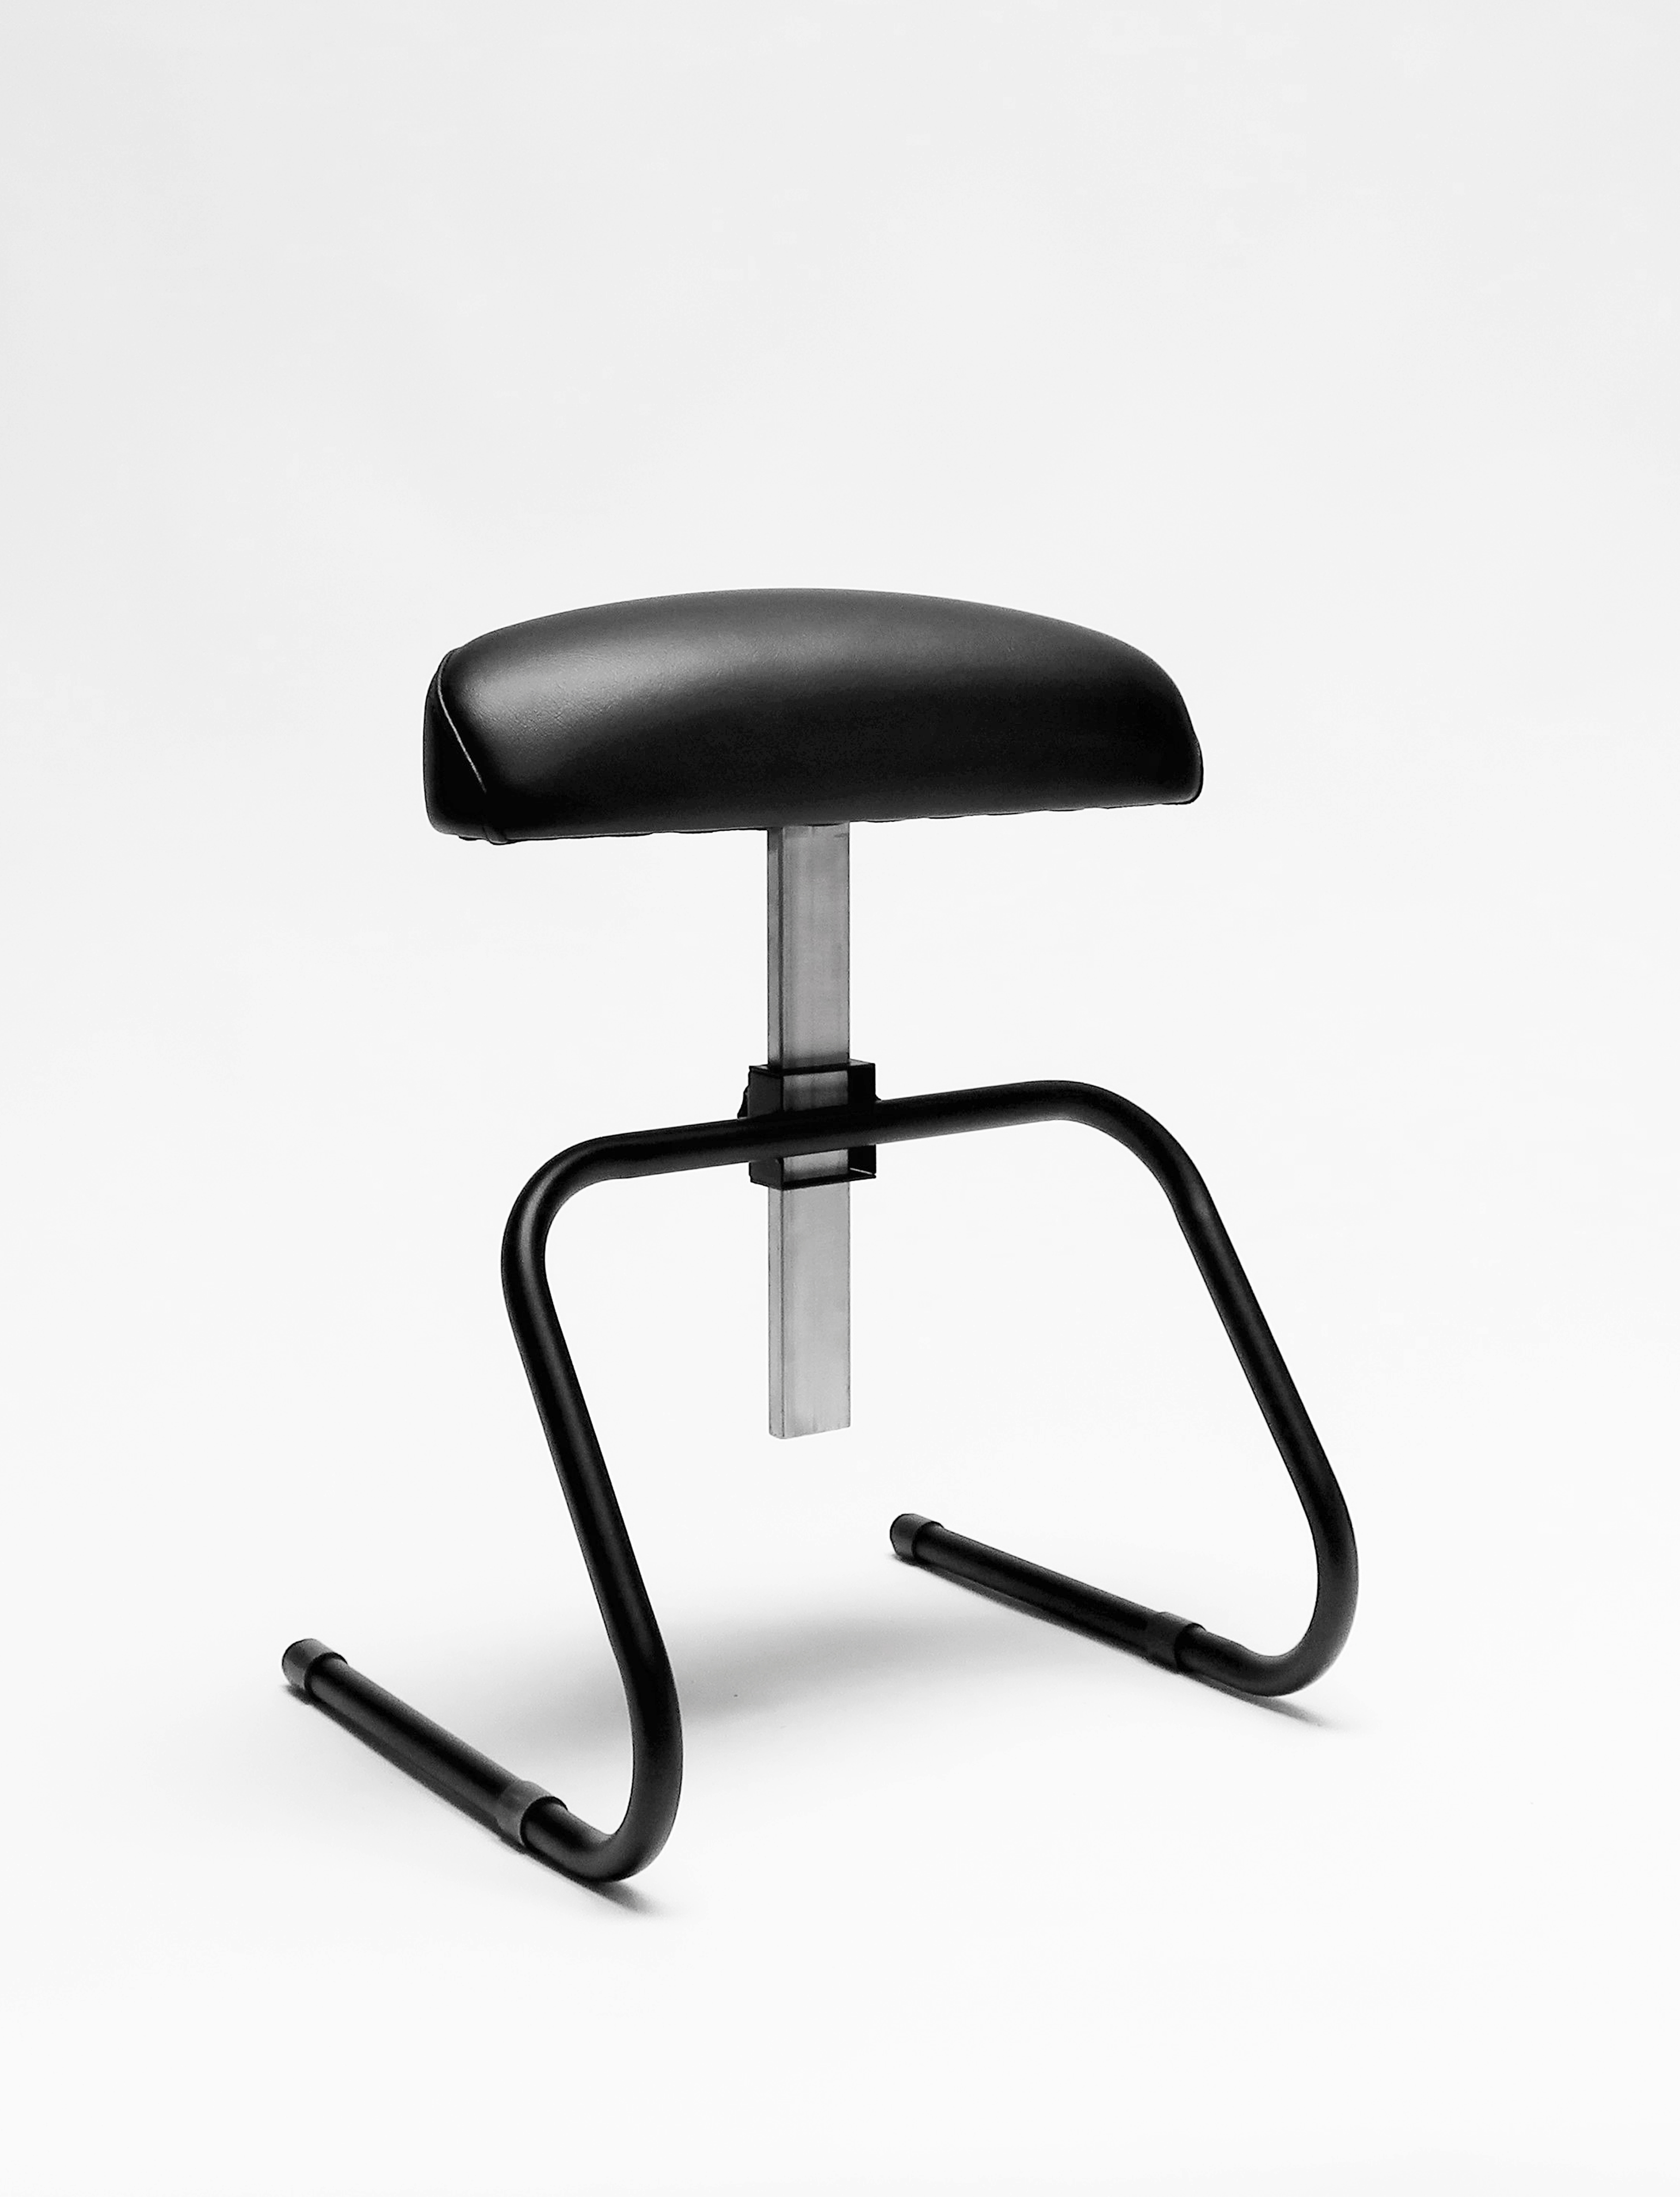 Footrest/stool